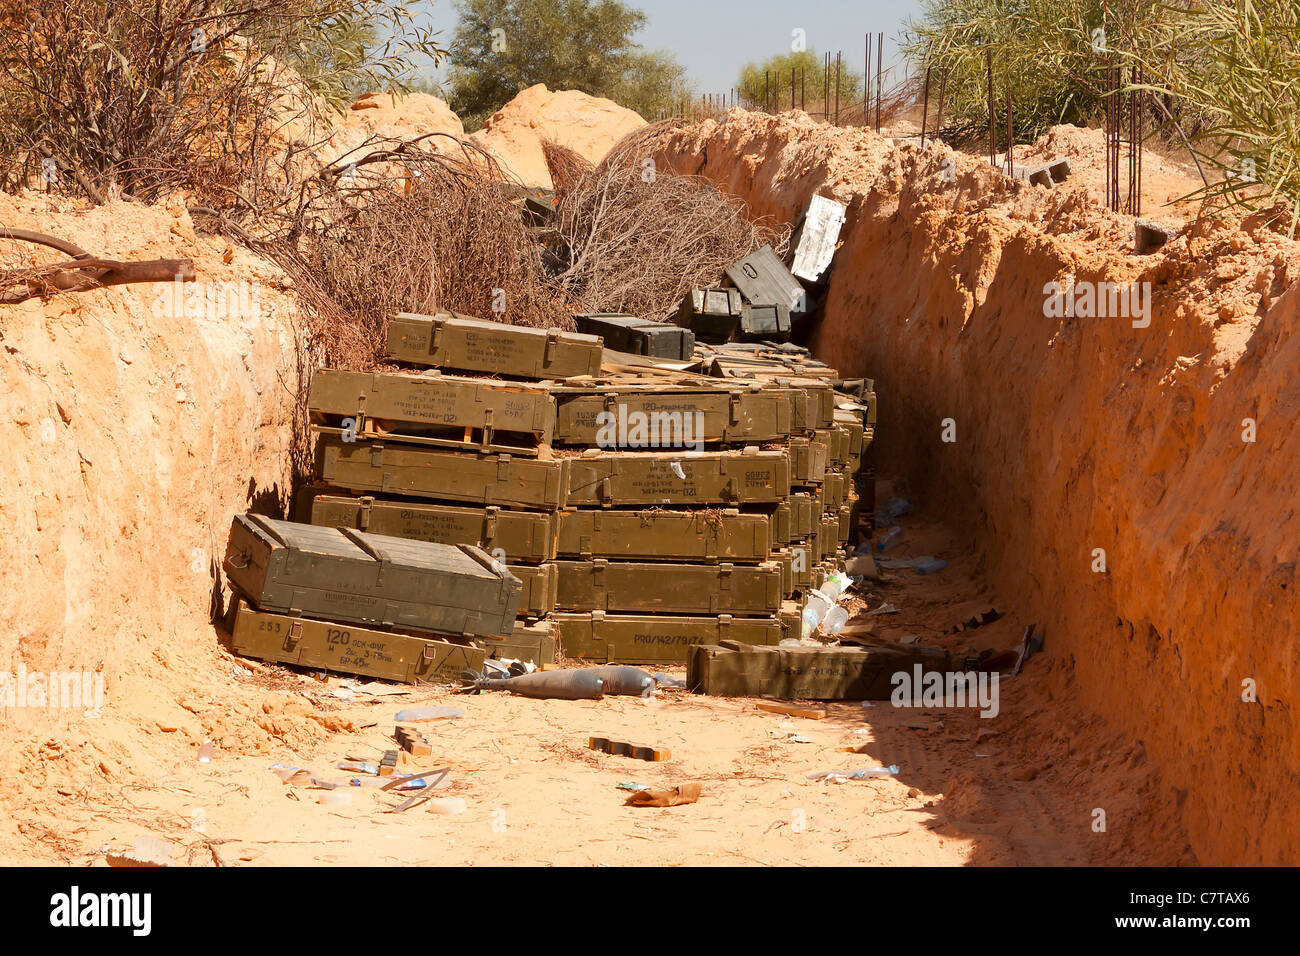 Libya tripoli 120mm high explosive mortar col Gaddafi conflict war civil Qaddafi Stock Photo